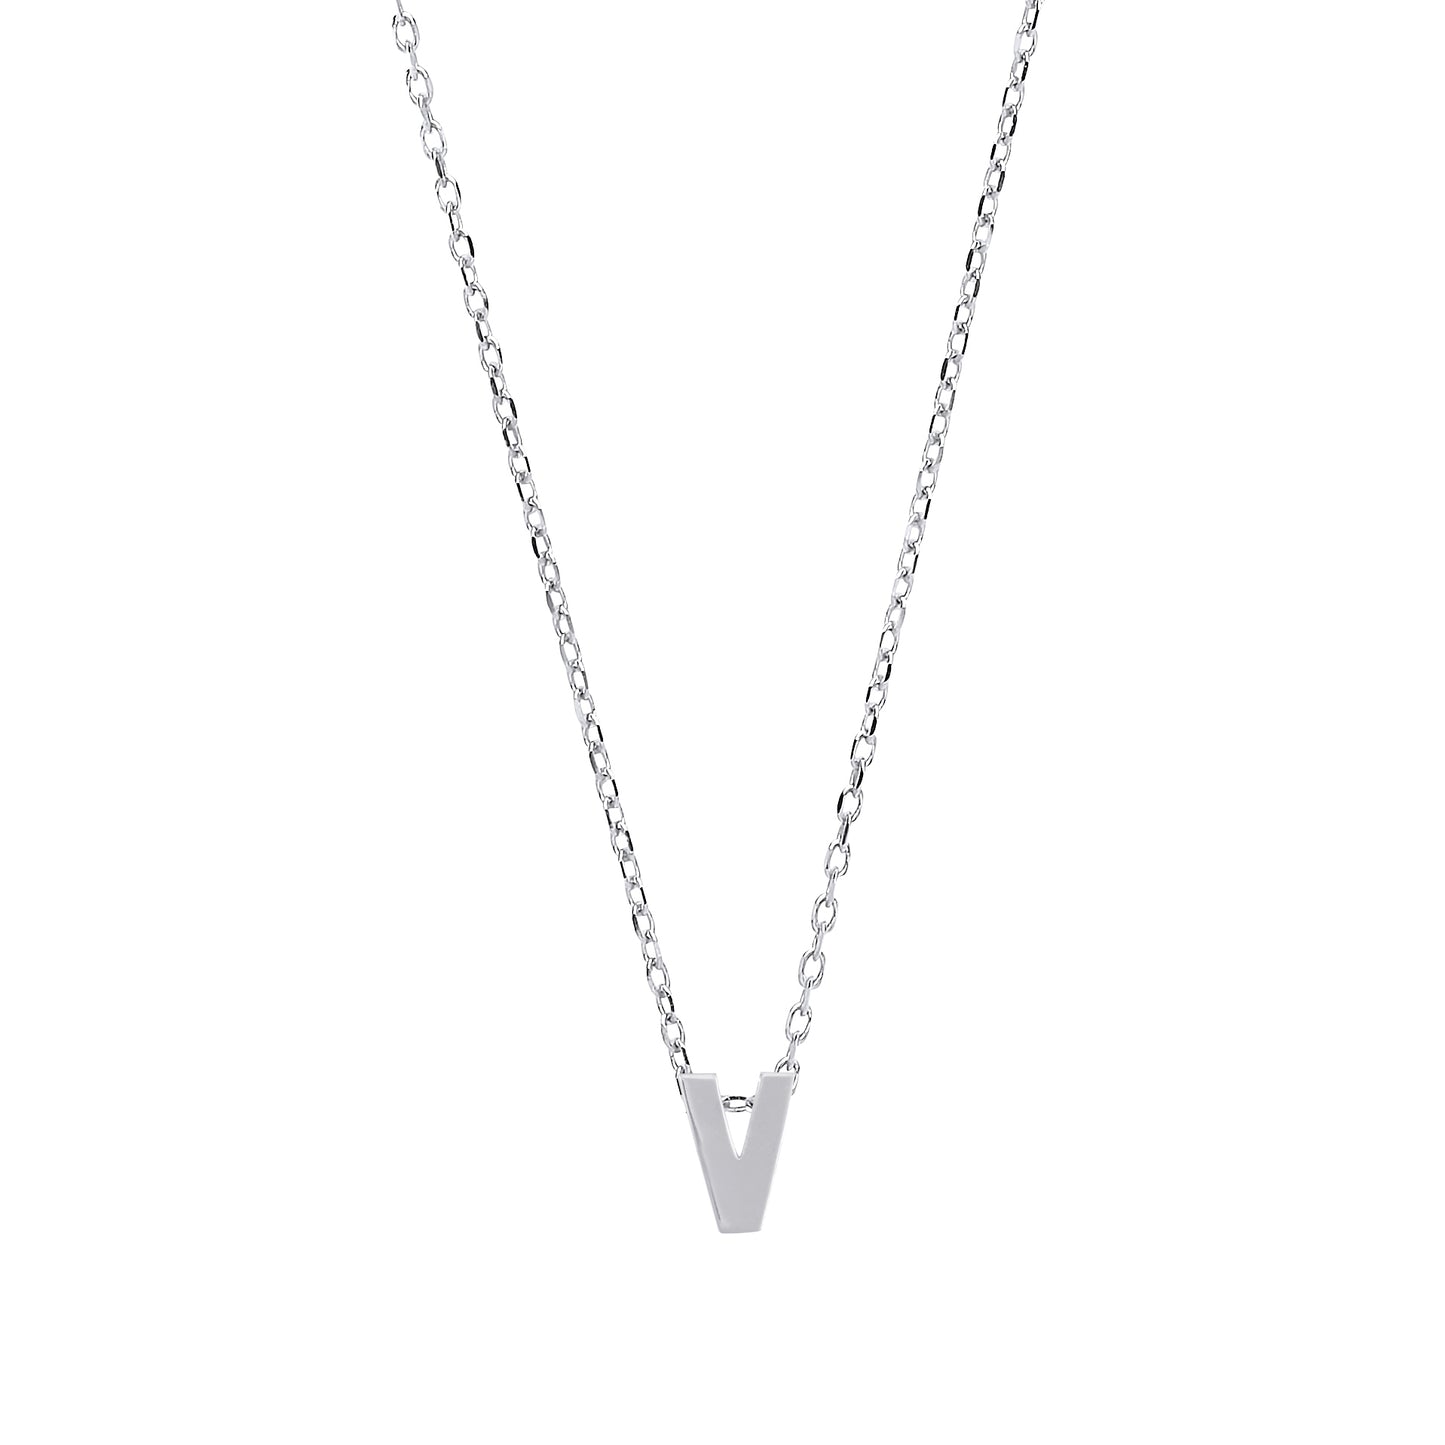 Silver  Letter V Initial Pendant Necklace 18 inch - GIN4V